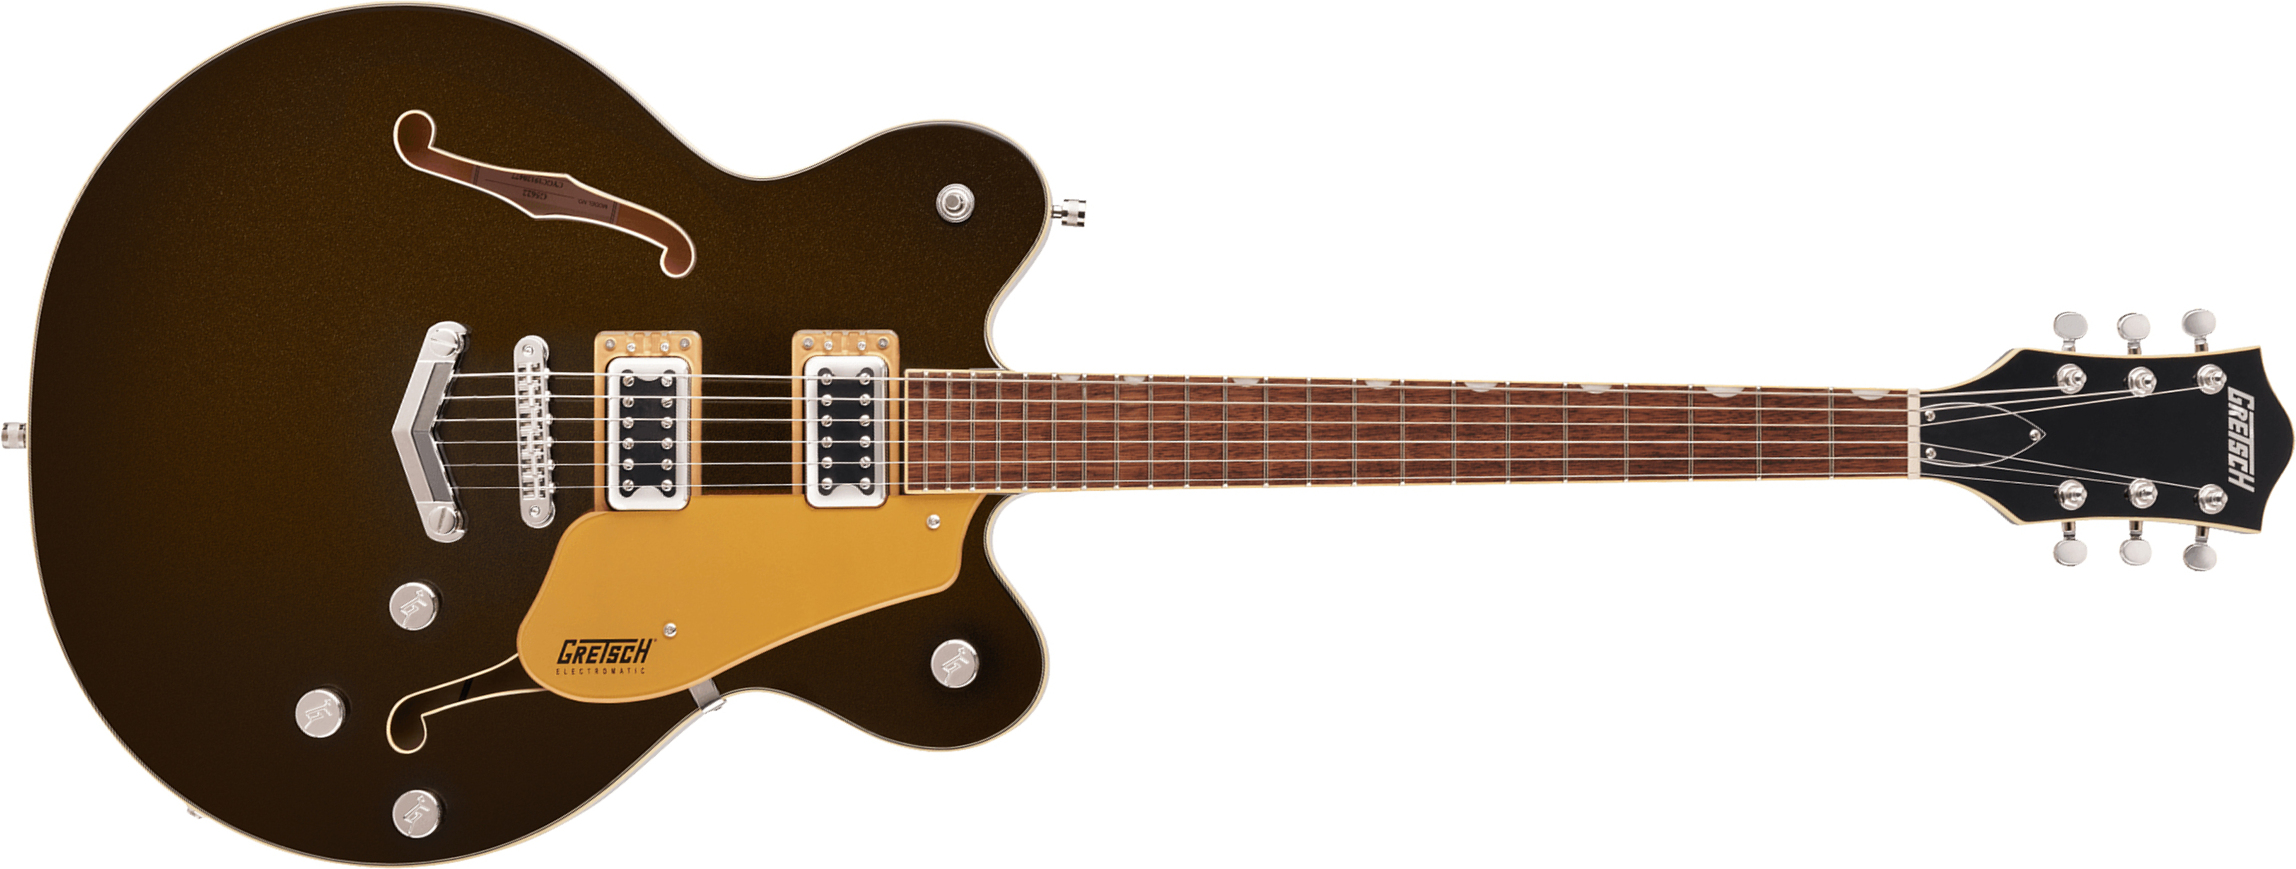 Gretsch G5622 Center Bloc Double Cut V-stoptail Electromatic Hh Ht Lau - Black Gold - Semi hollow elektriche gitaar - Main picture